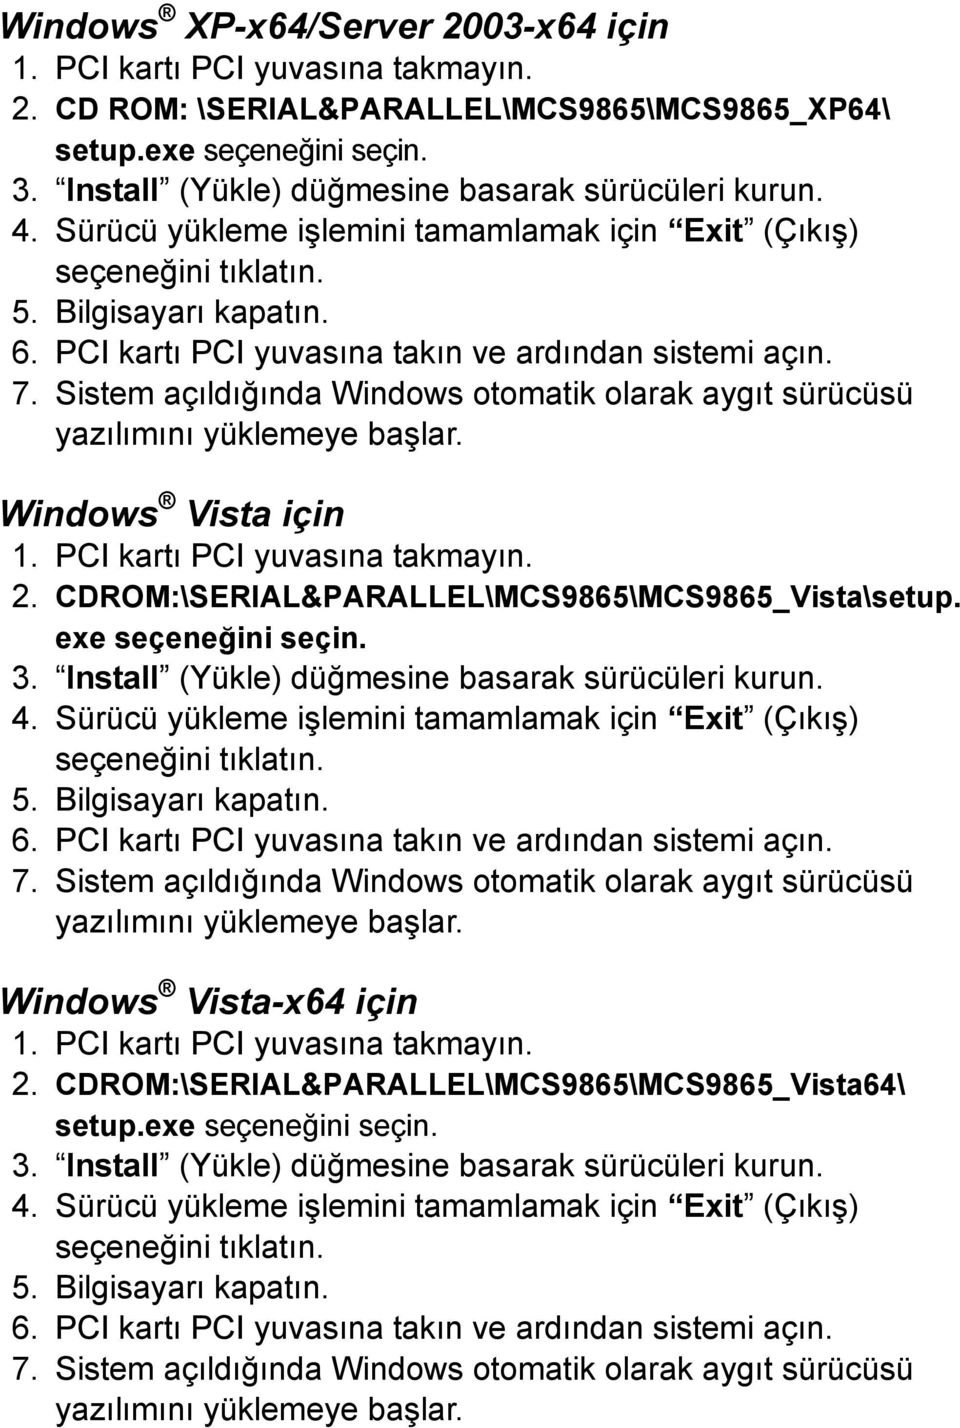 Windows Vista için 2. CDROM:\SERIAL&PARALLEL\MCS9865\MCS9865_Vista\setup.